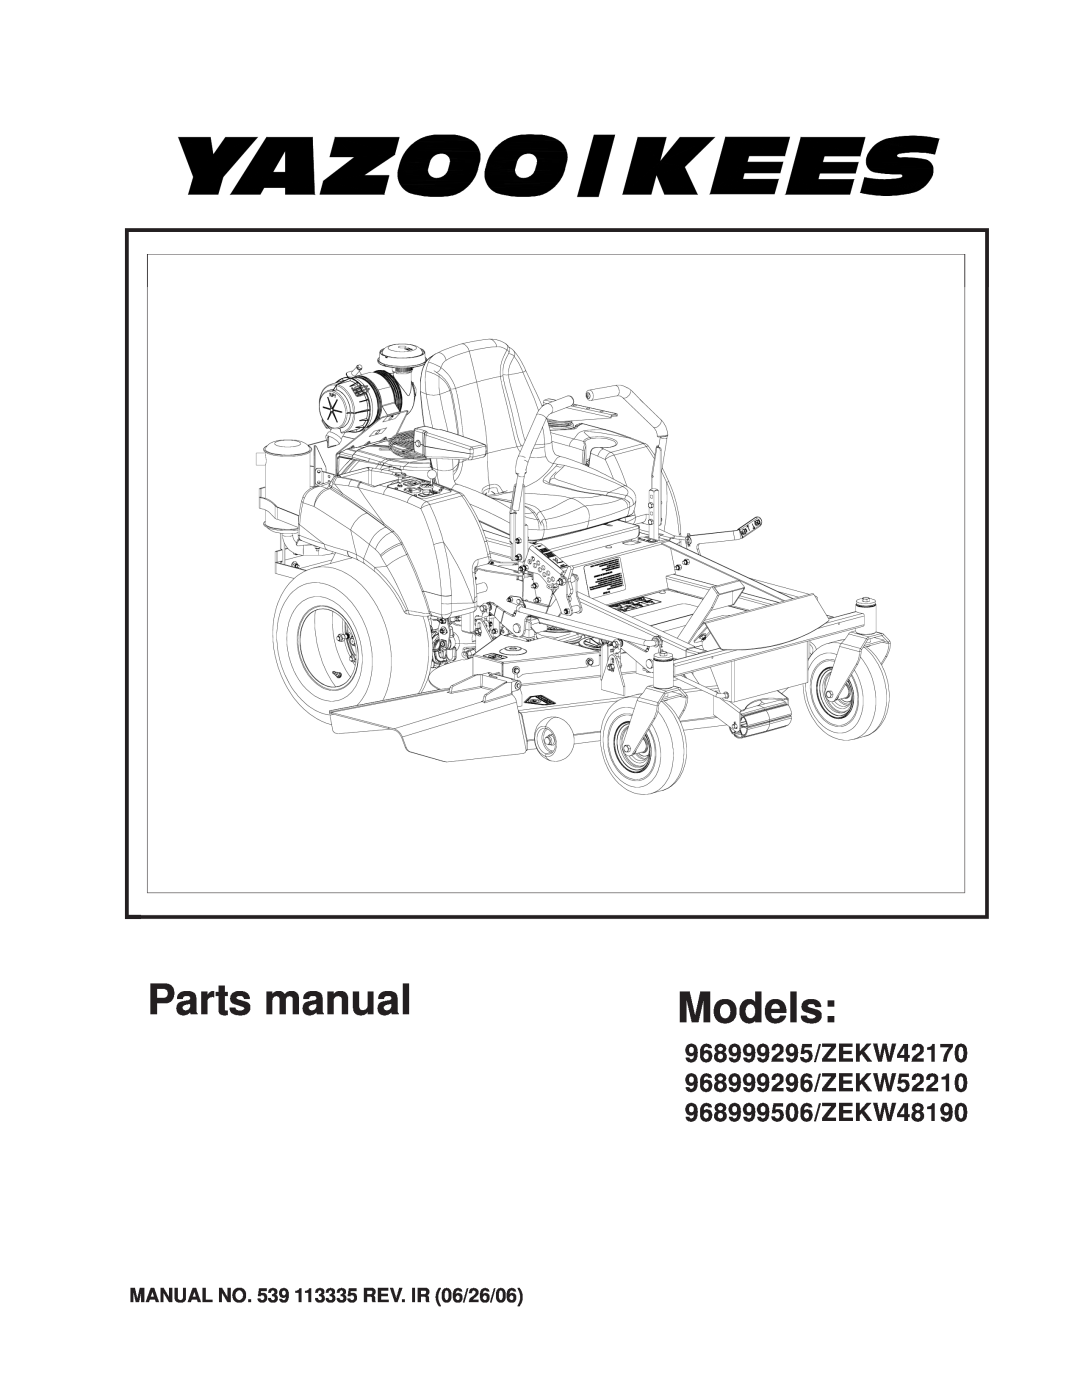 Yazoo/Kees 968999506 manual MANUAL NO. 539 113335 REV. IR 06/26/06, Parts manual, Models, 968999295/ZEKW42170 